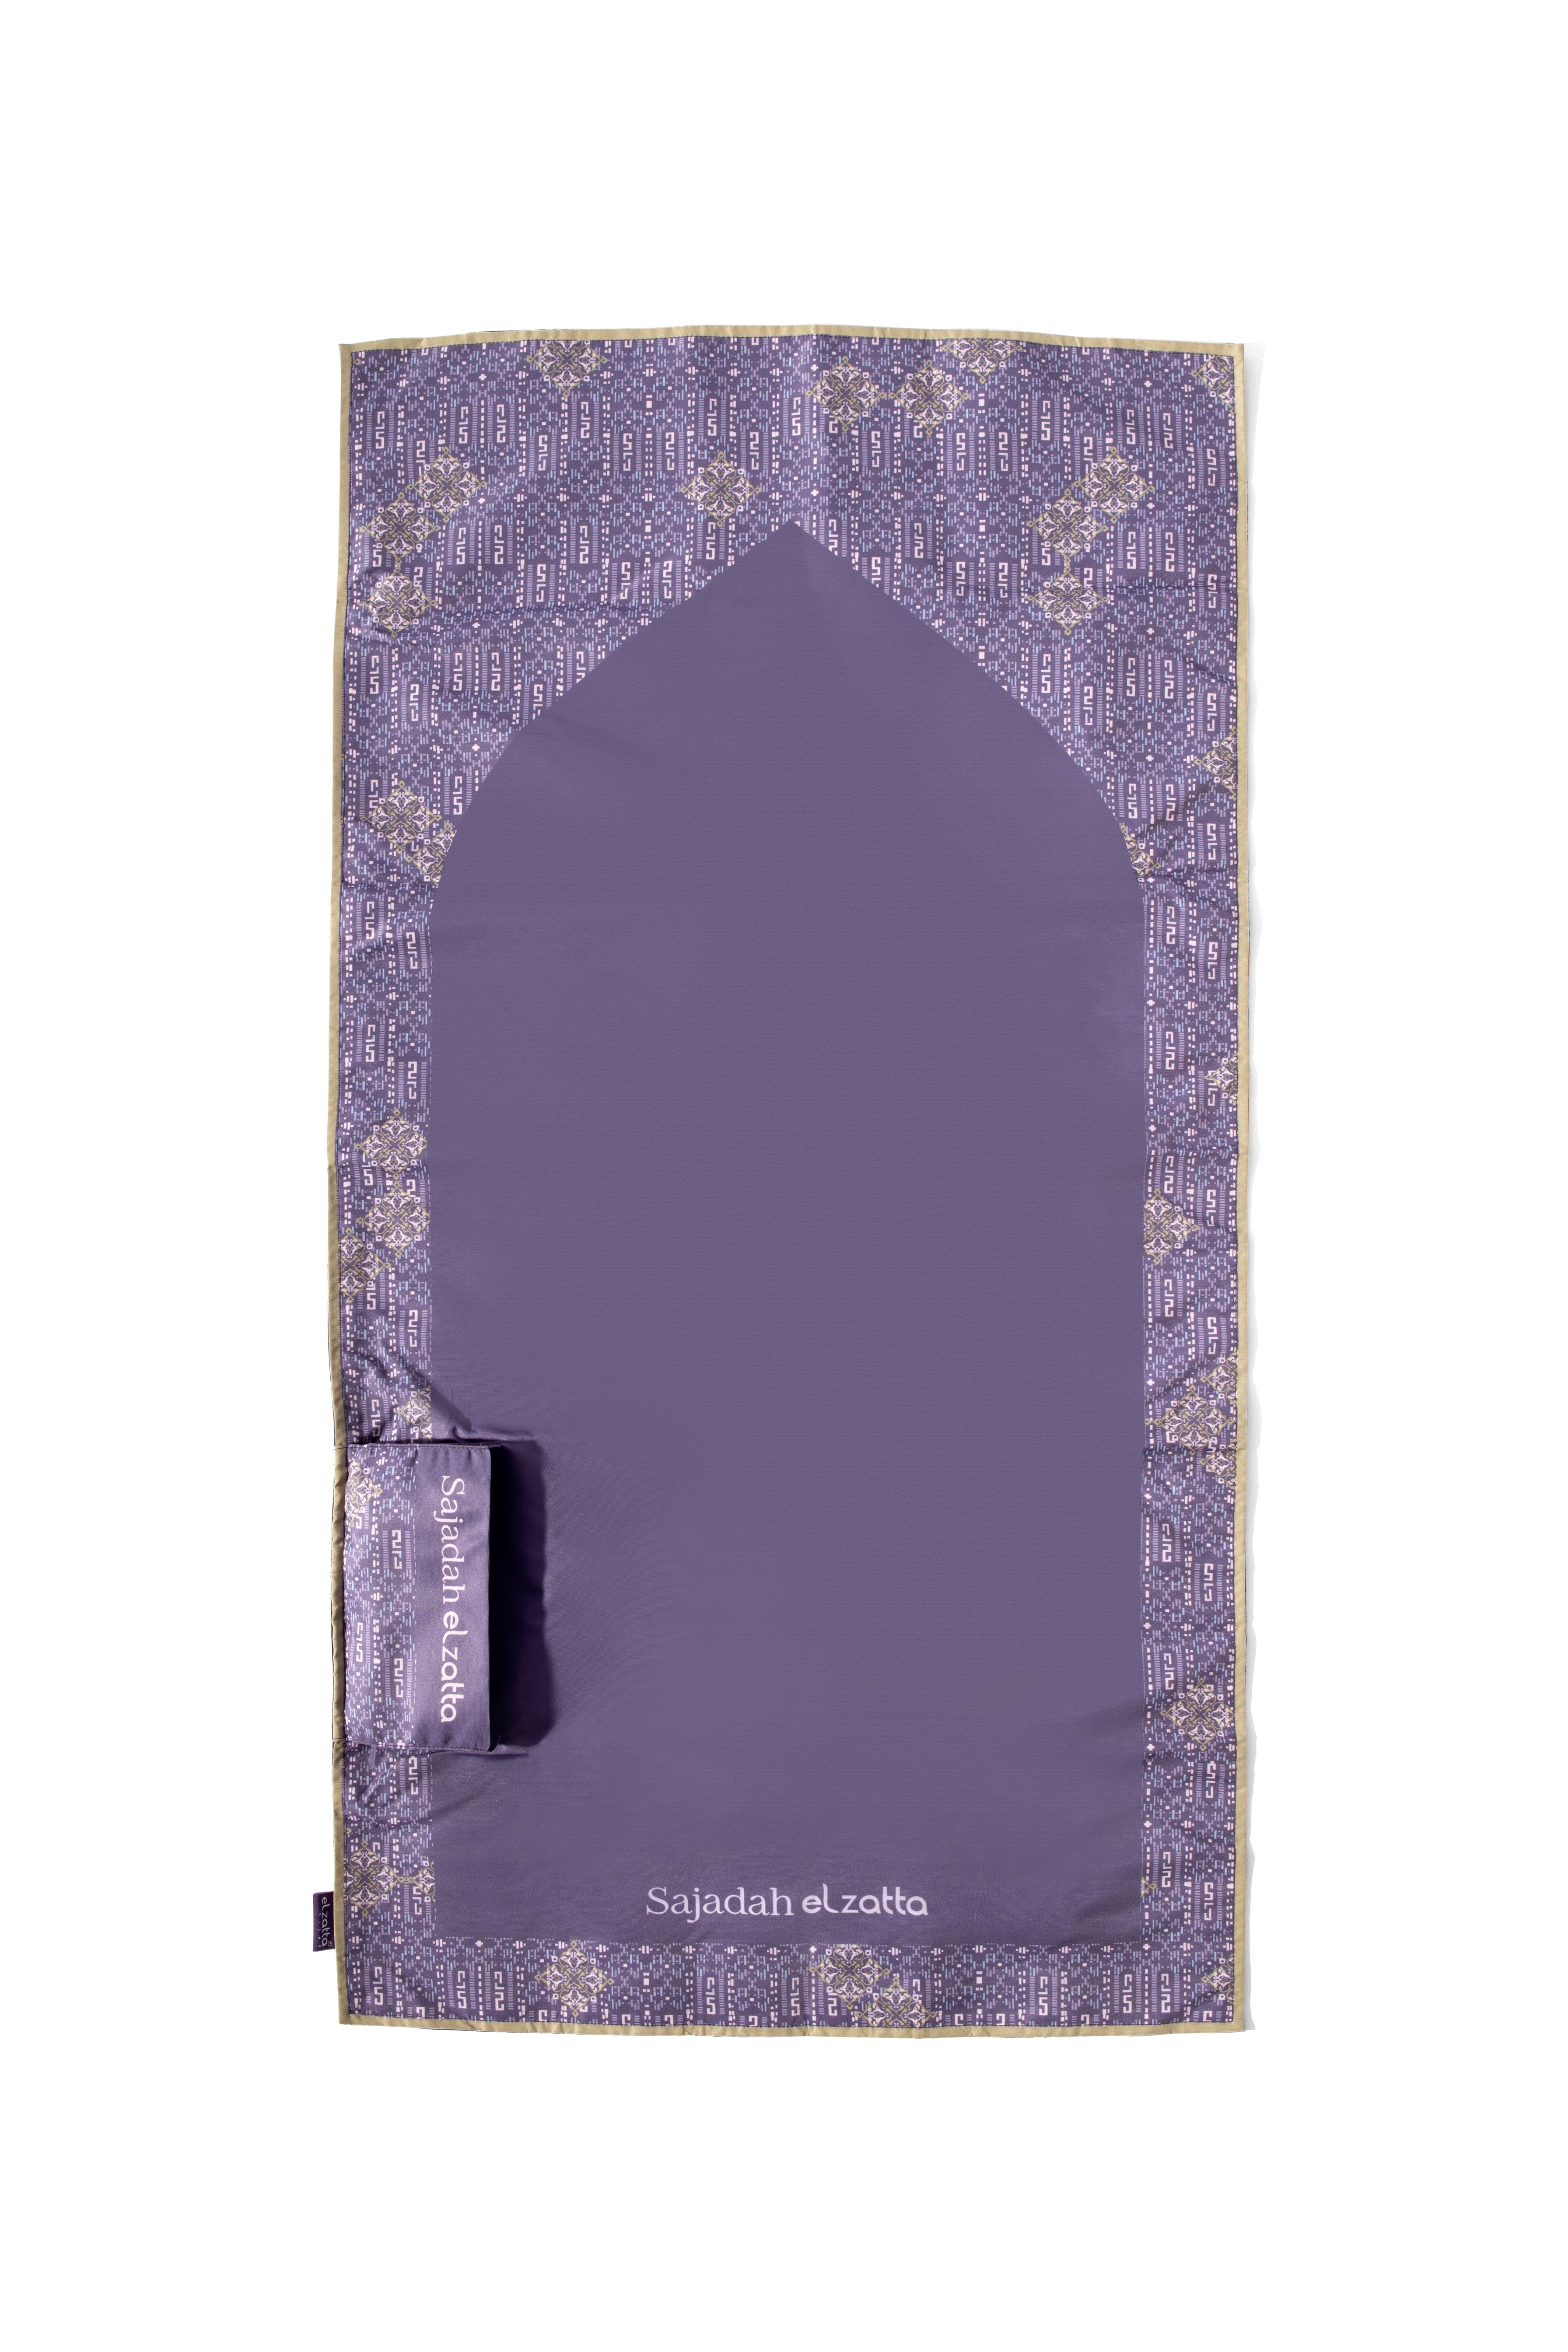 Elzatta Sajadah Alwani Pocket - Dark Purple